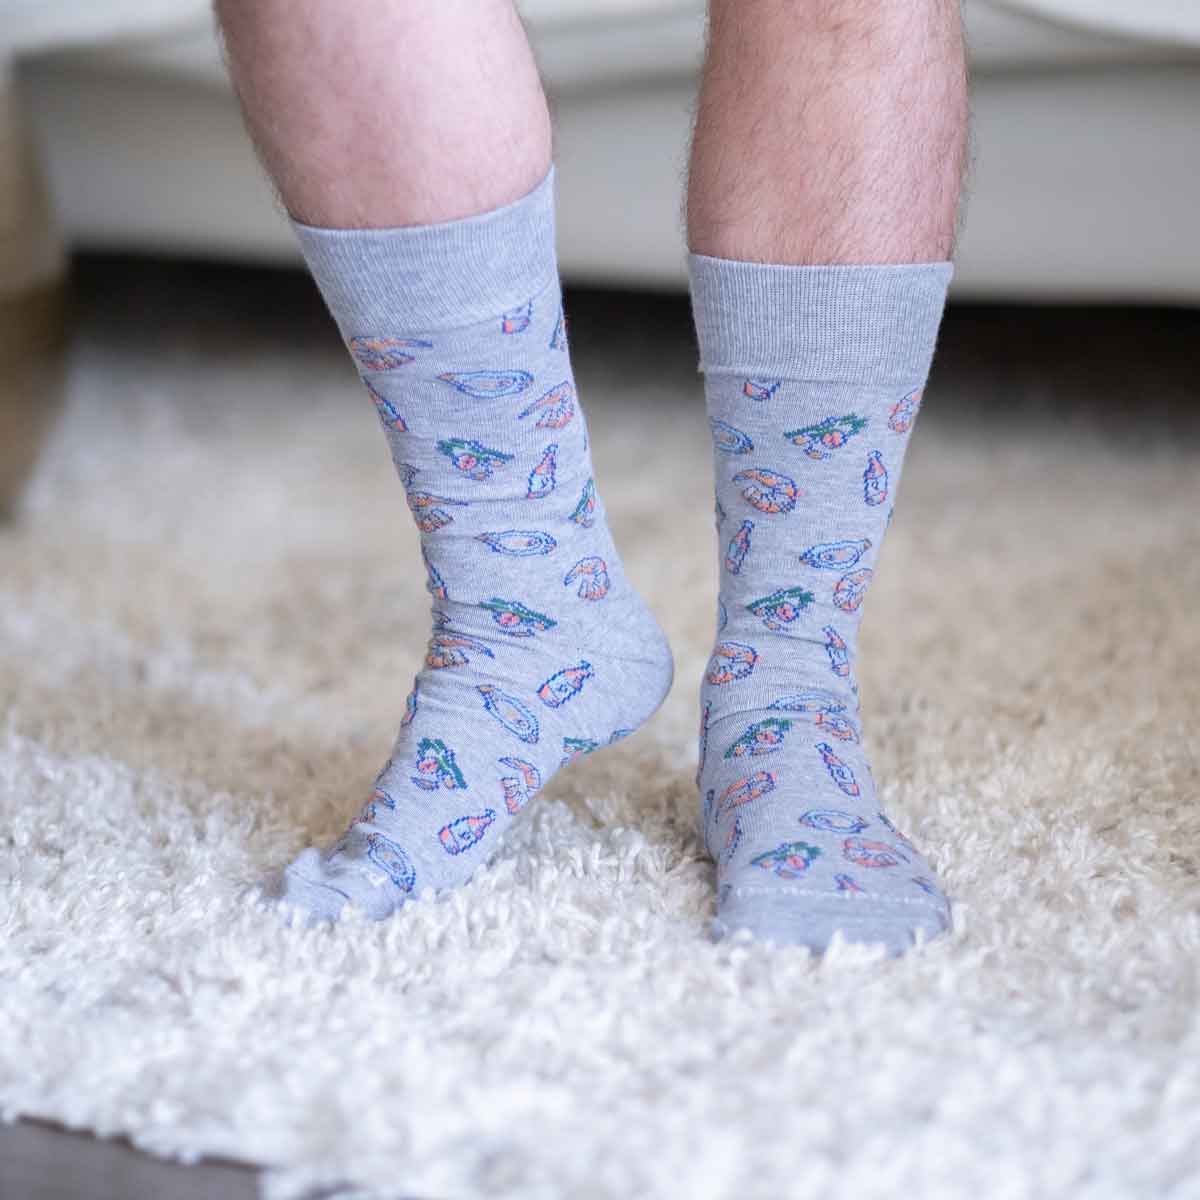 Men’s Socks